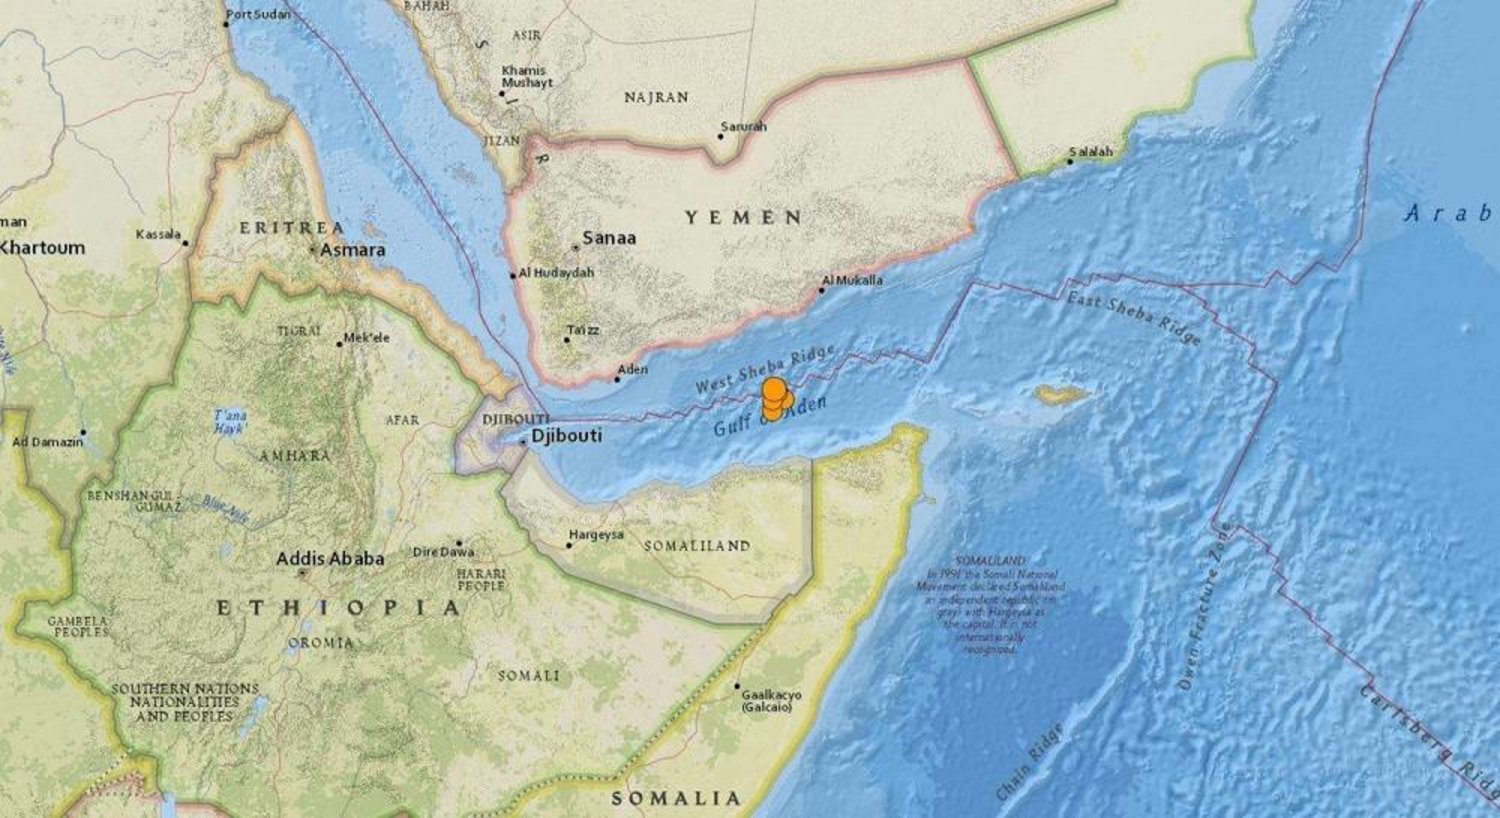 A 5.9-magnitude earthquake struck in the Gulf of Aden region on Saturday. (USGS)